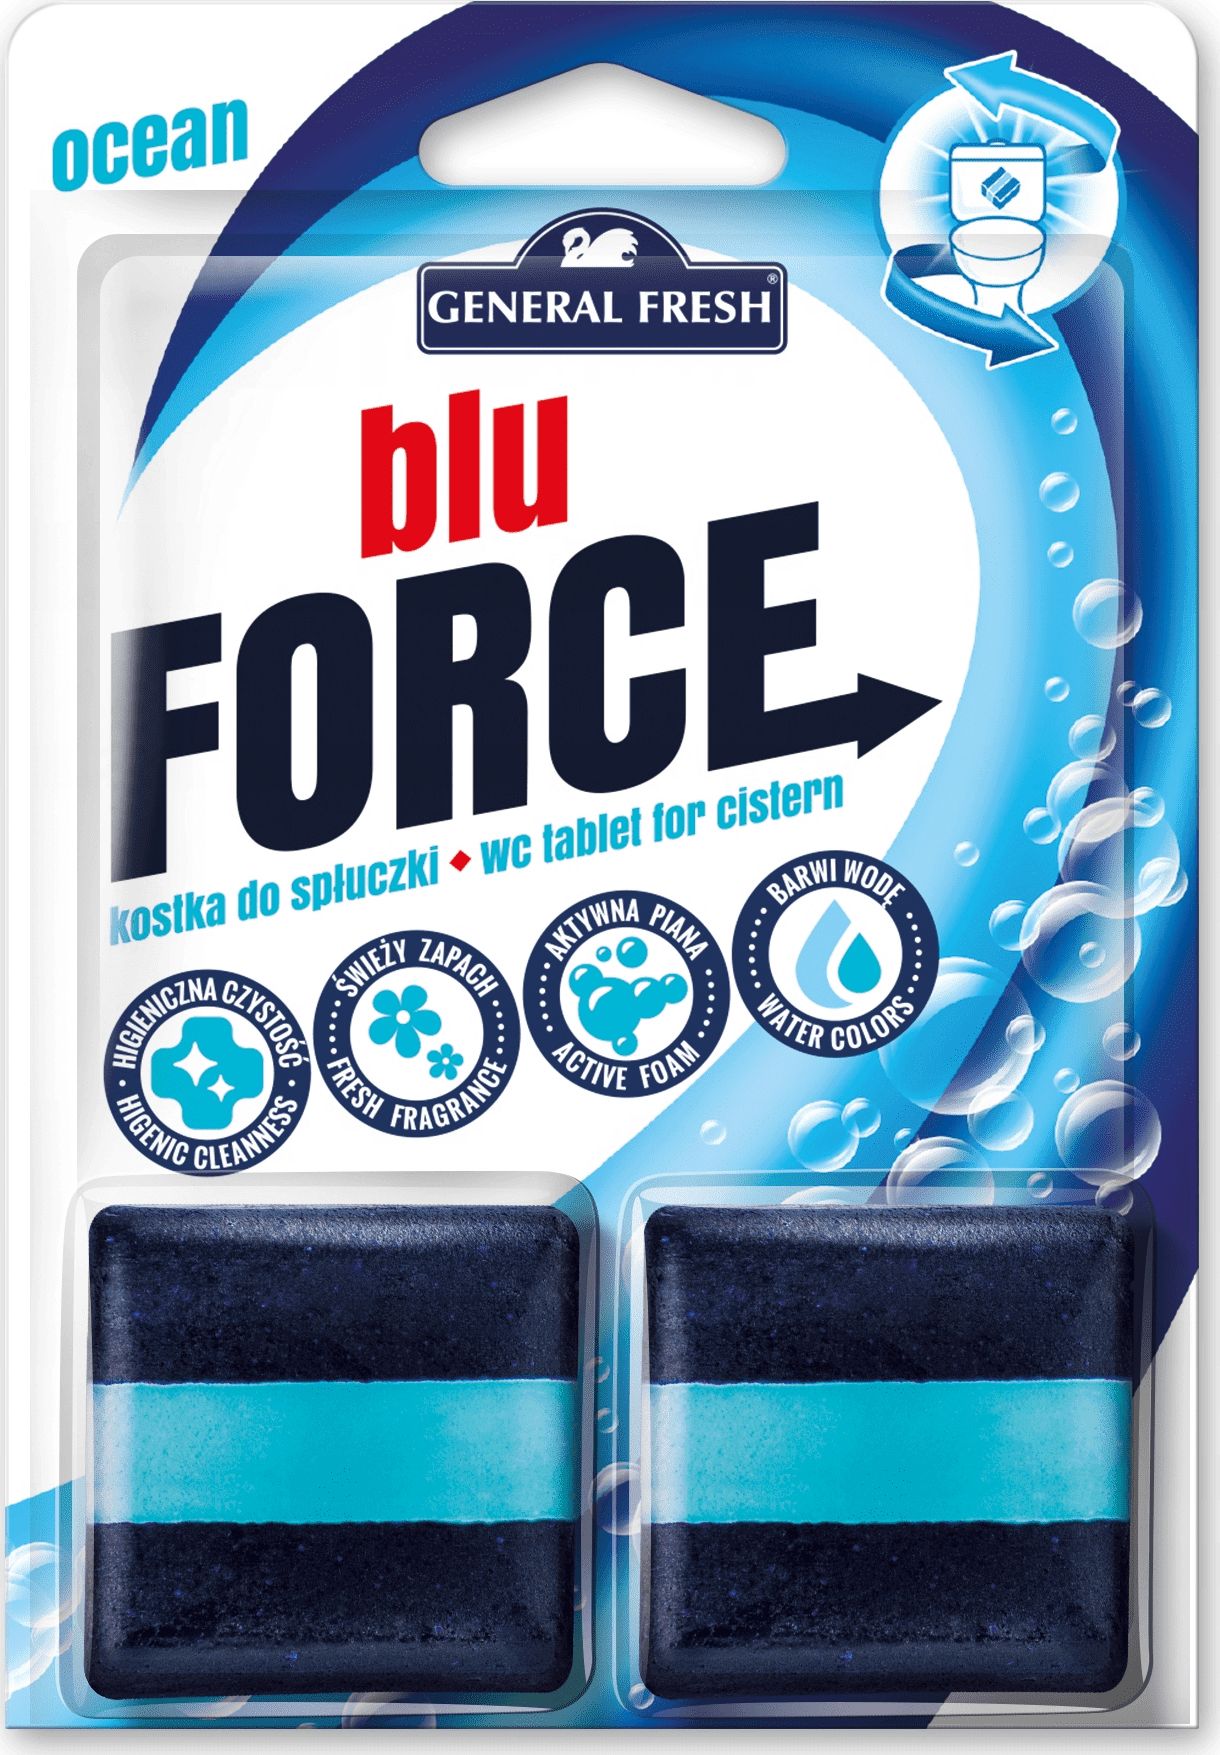 General Fresh GENERAL FRESH FORCE Blue Morska 2x 50g - kostka do spluczki WC OFE000376 (5900785450005) Sadzīves ķīmija